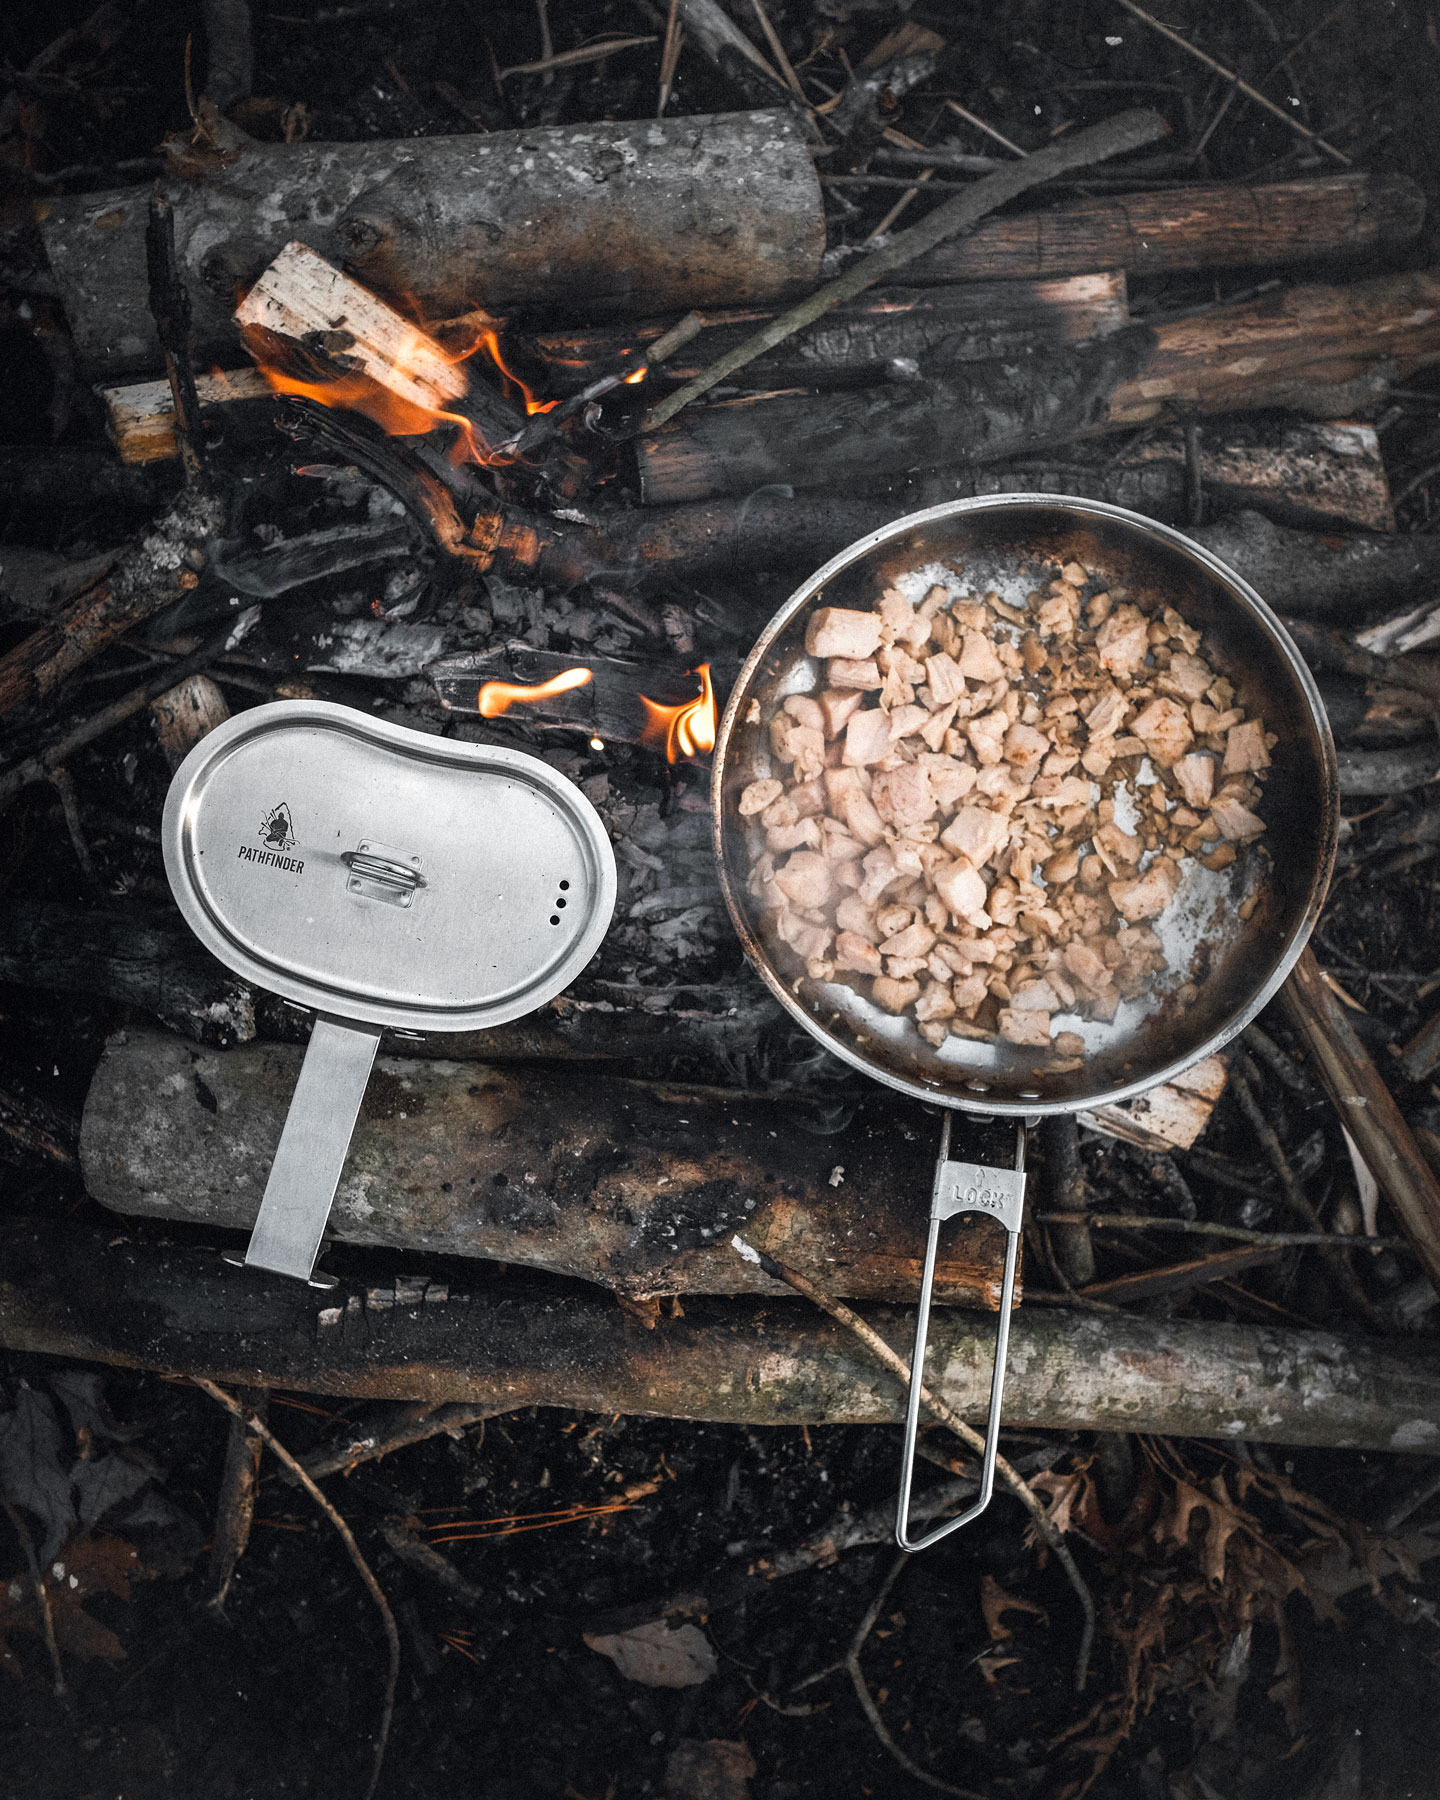 Pathfinder Campfire Survival Cooking Kit